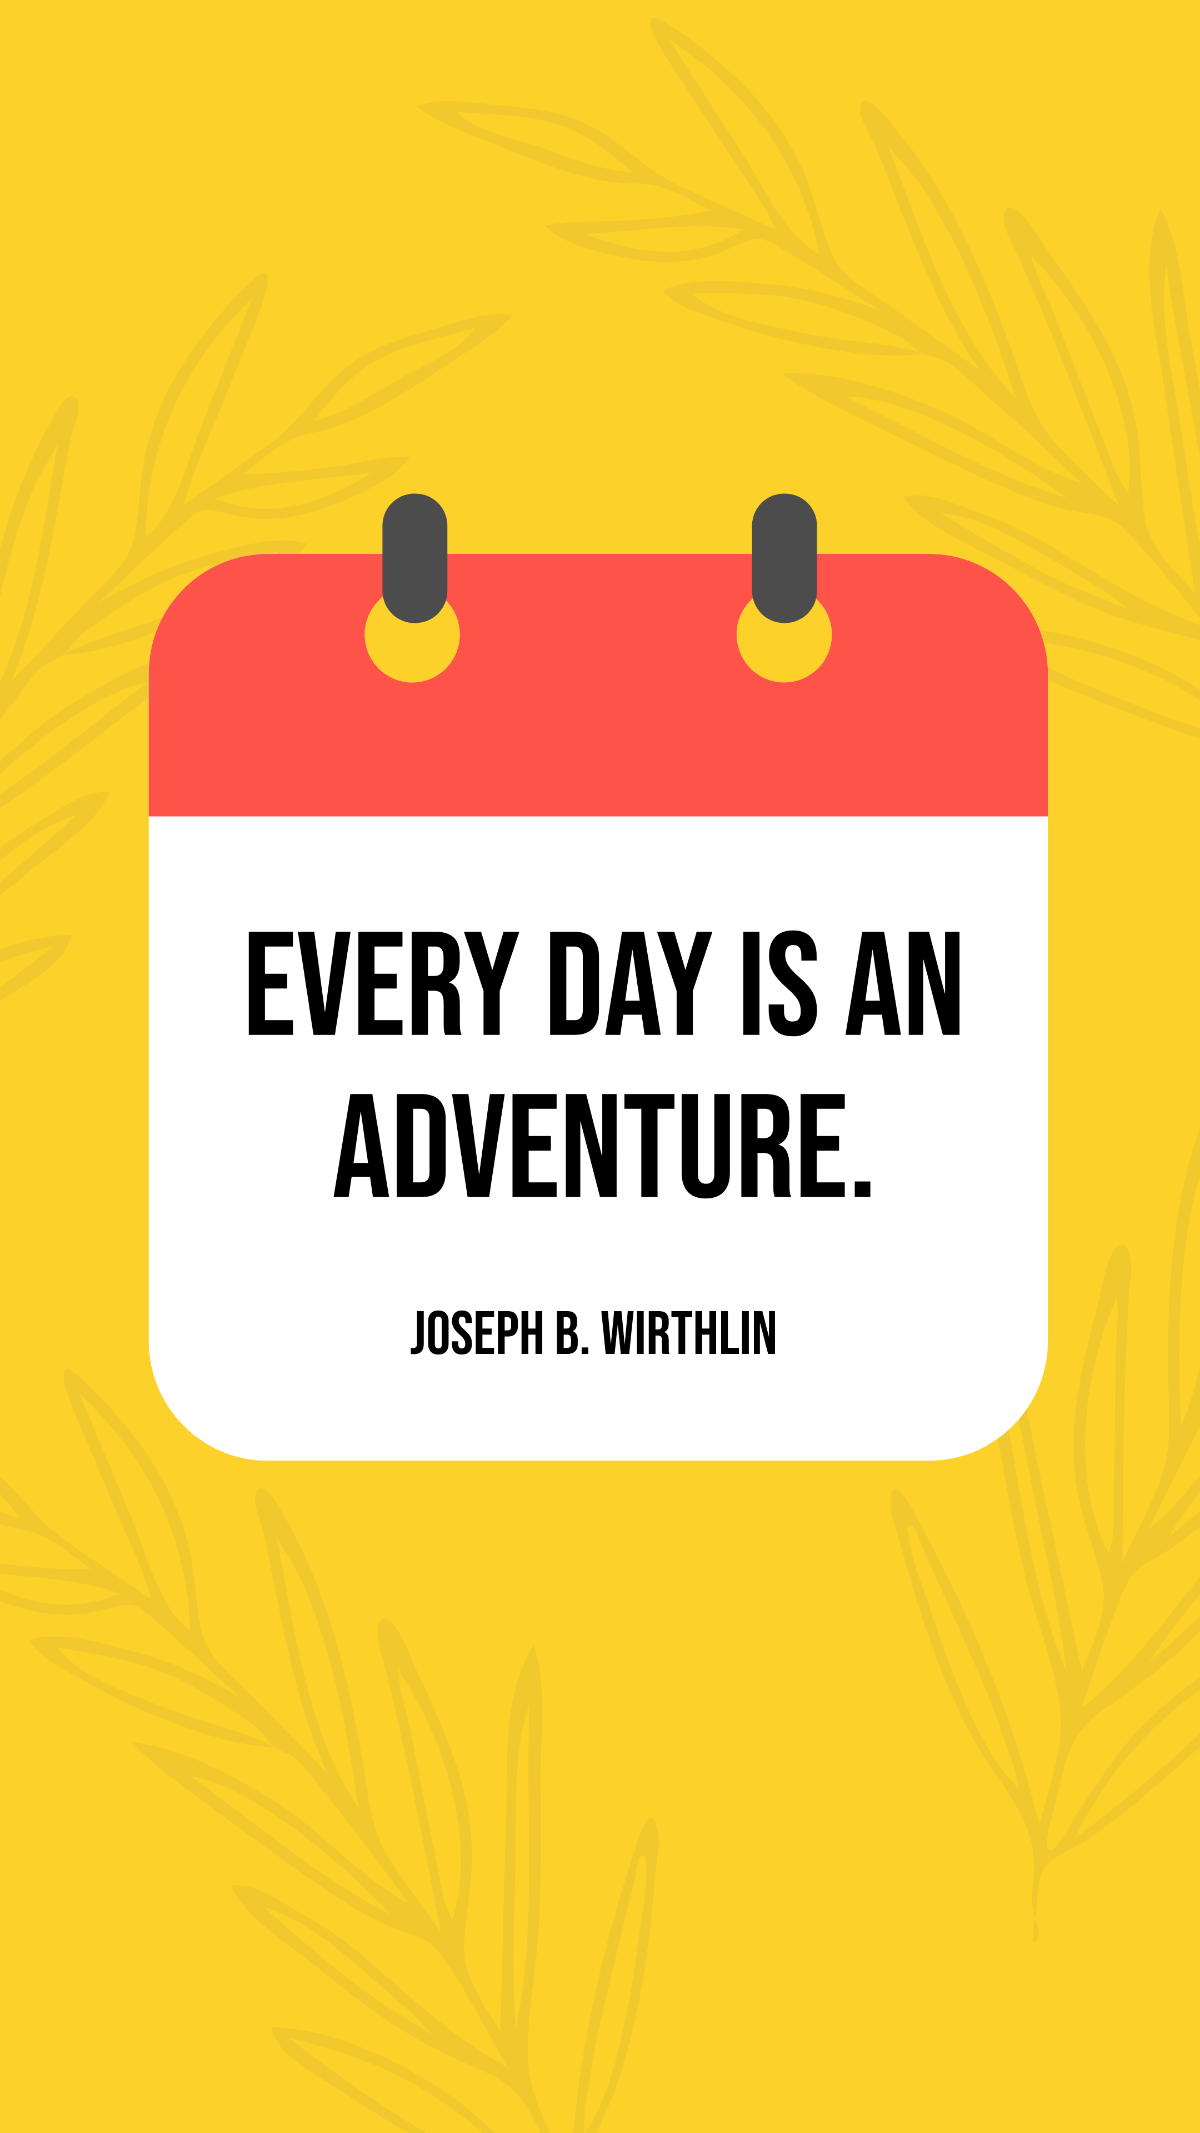 Joseph B. Wirthlin - Every day is an adventure.